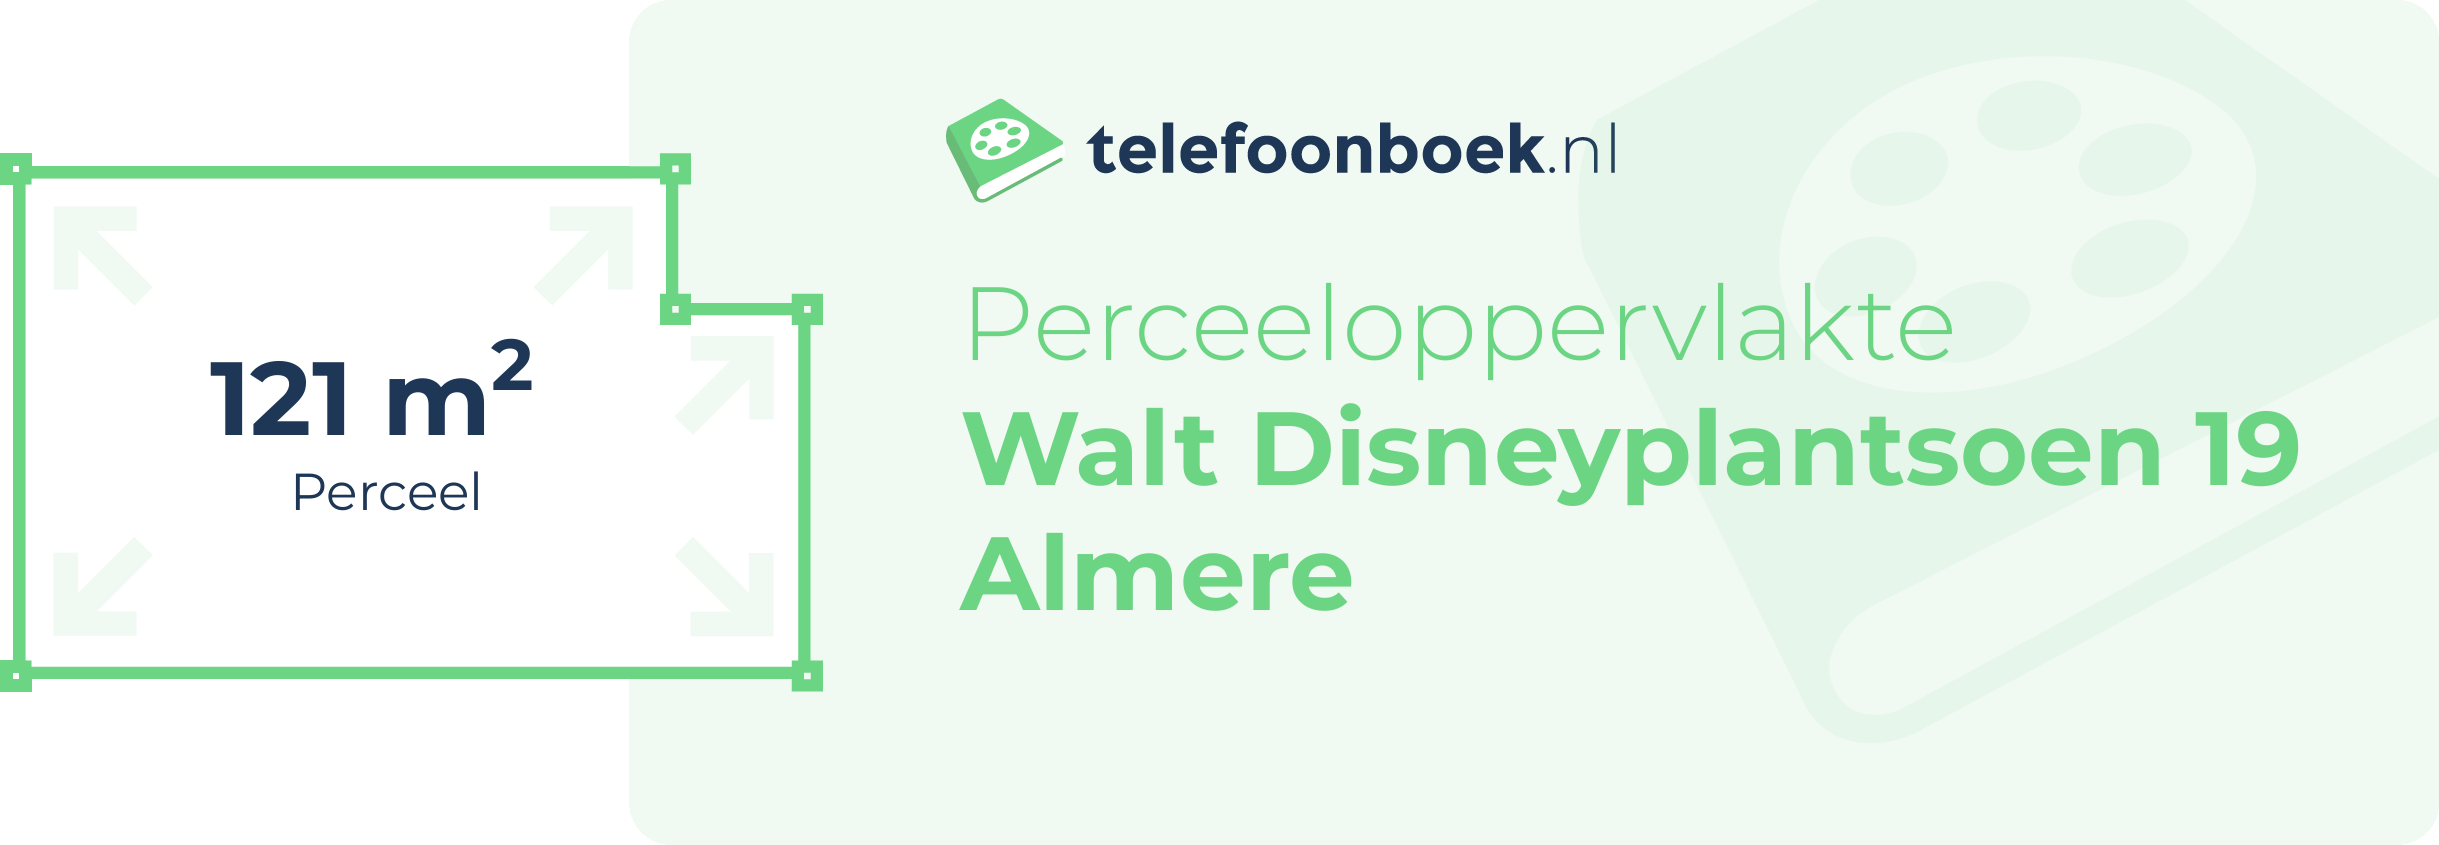 Perceeloppervlakte Walt Disneyplantsoen 19 Almere